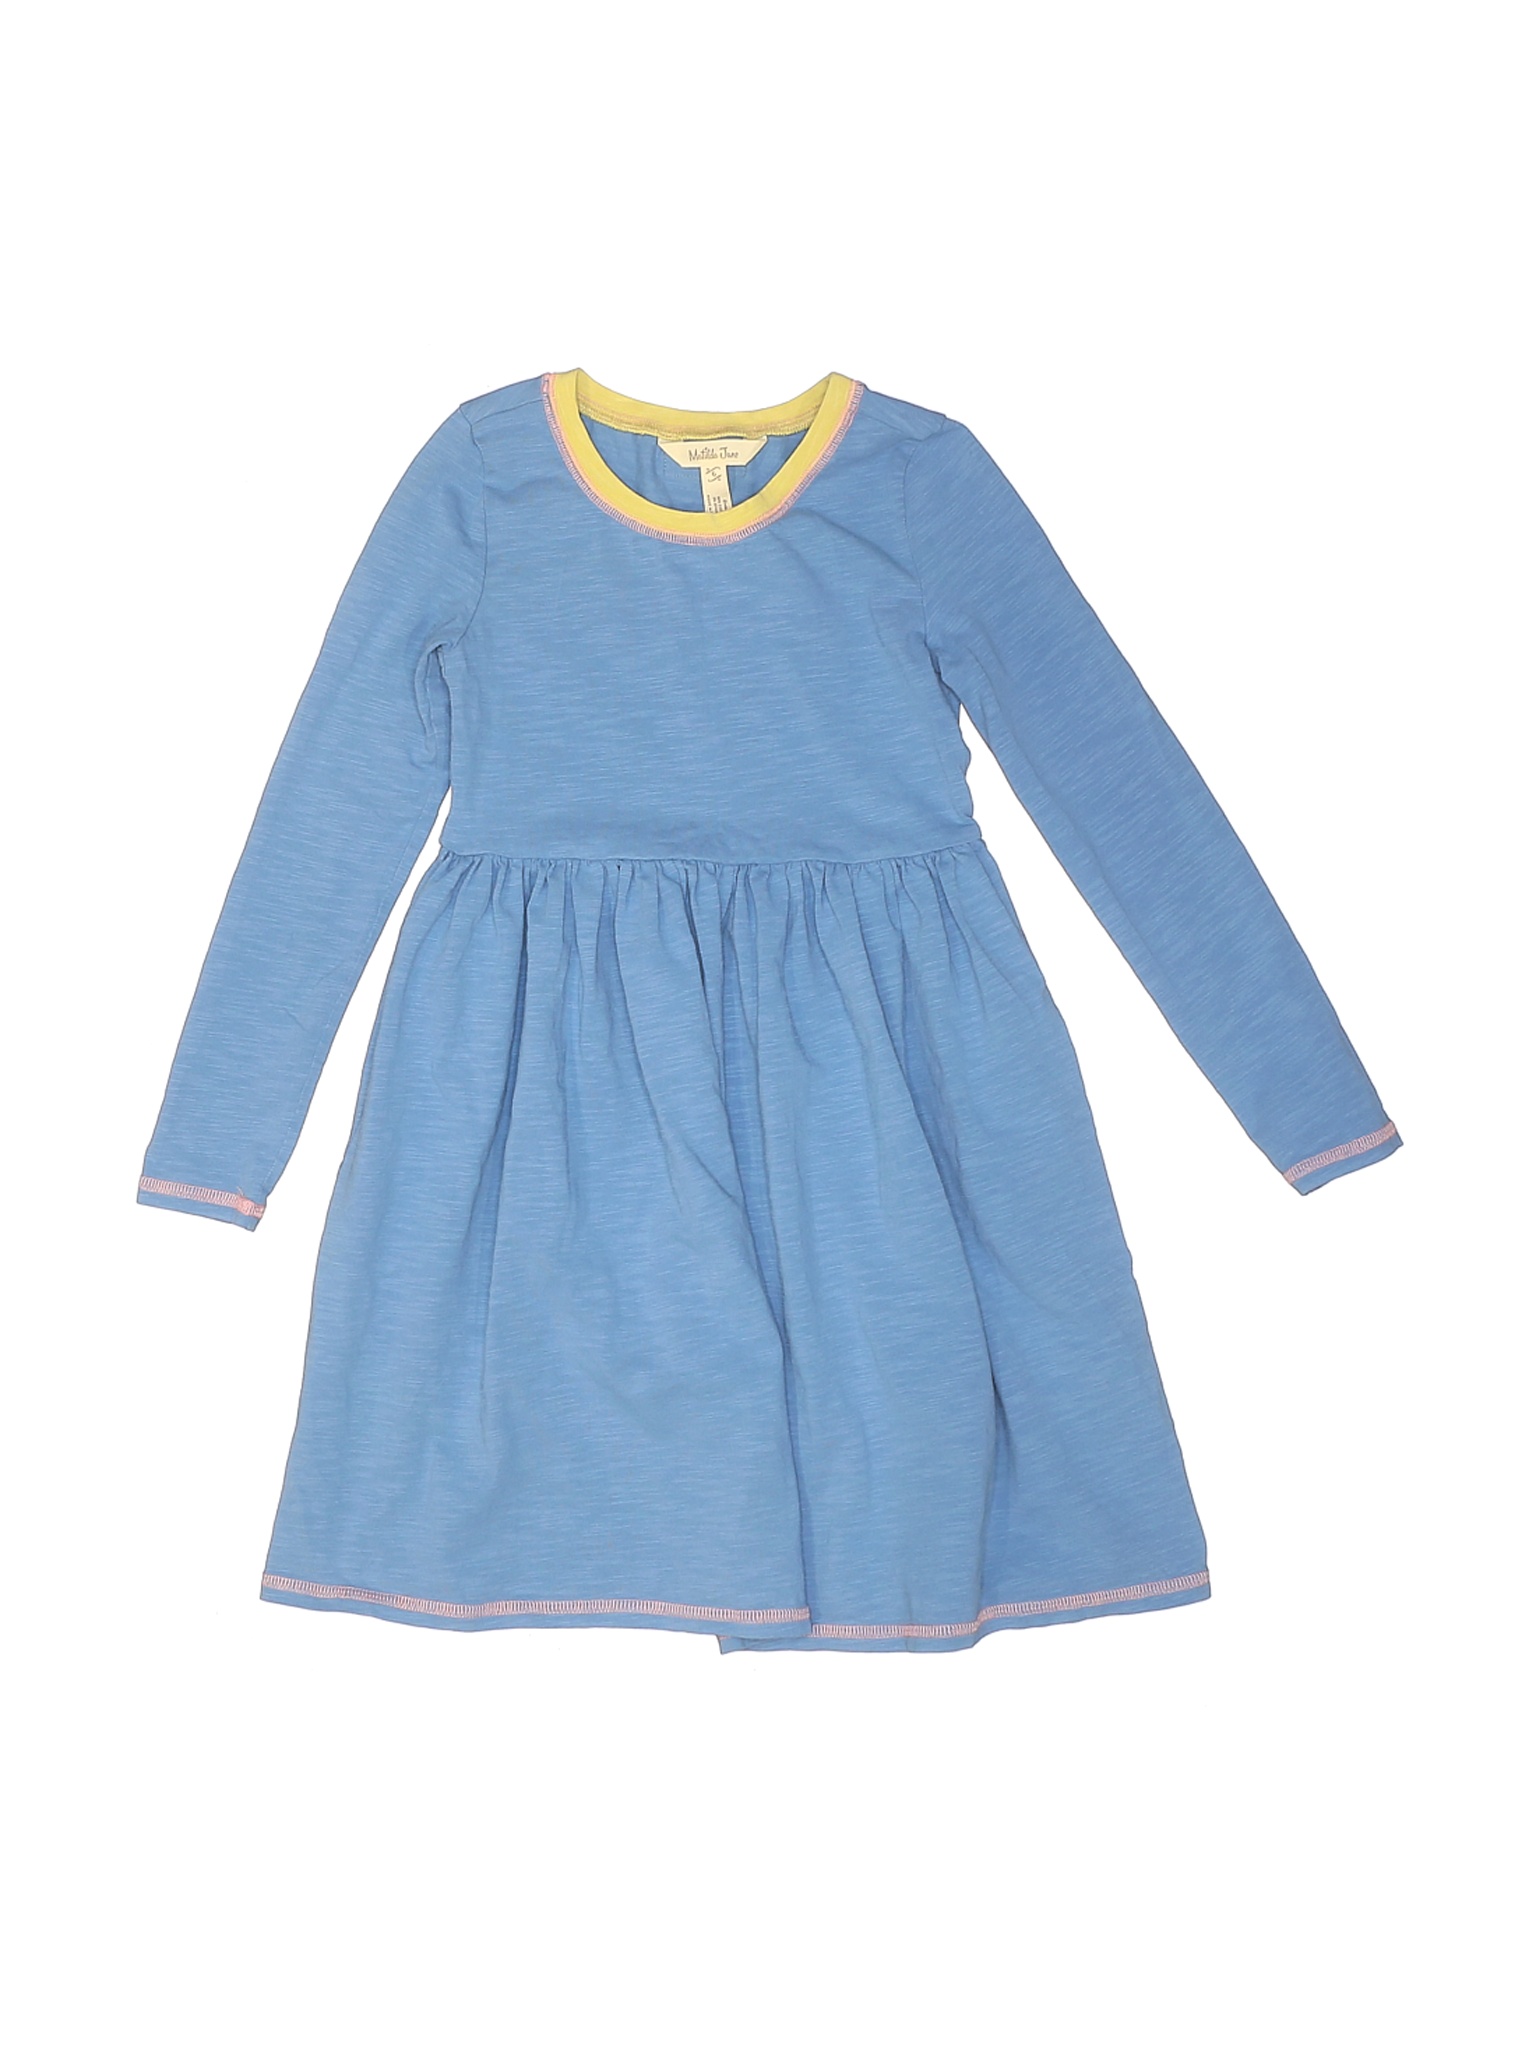 Matilda Jane Girls Blue Dress 6 | eBay